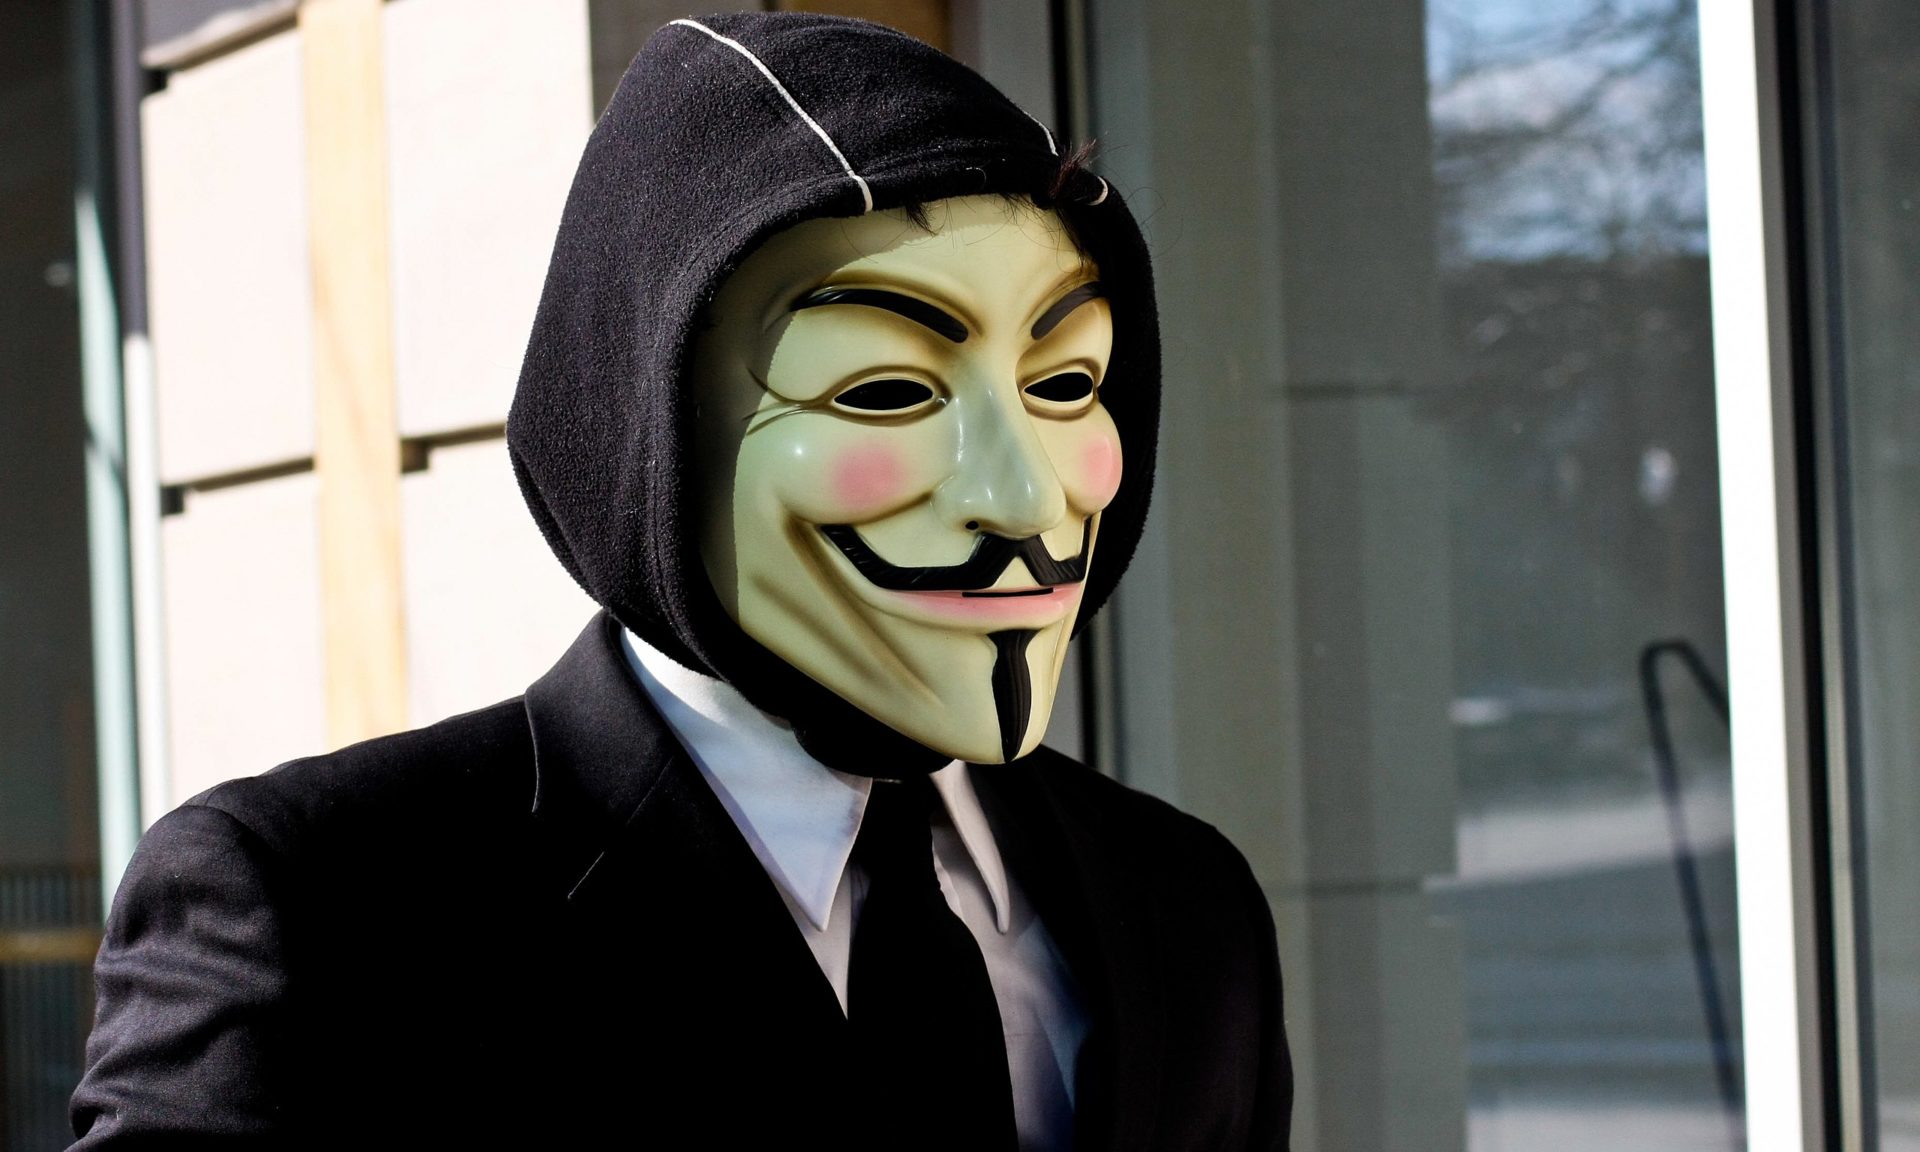 Anonymous ปล่อยคลิปขู่ ‘อีลอน มัสก์’ หลังทวีตจนมูลค่า Bitcoin ลดฮวบ ด้าน Anonymous บอกไม่ใช่คลิปเรา เอ้า~